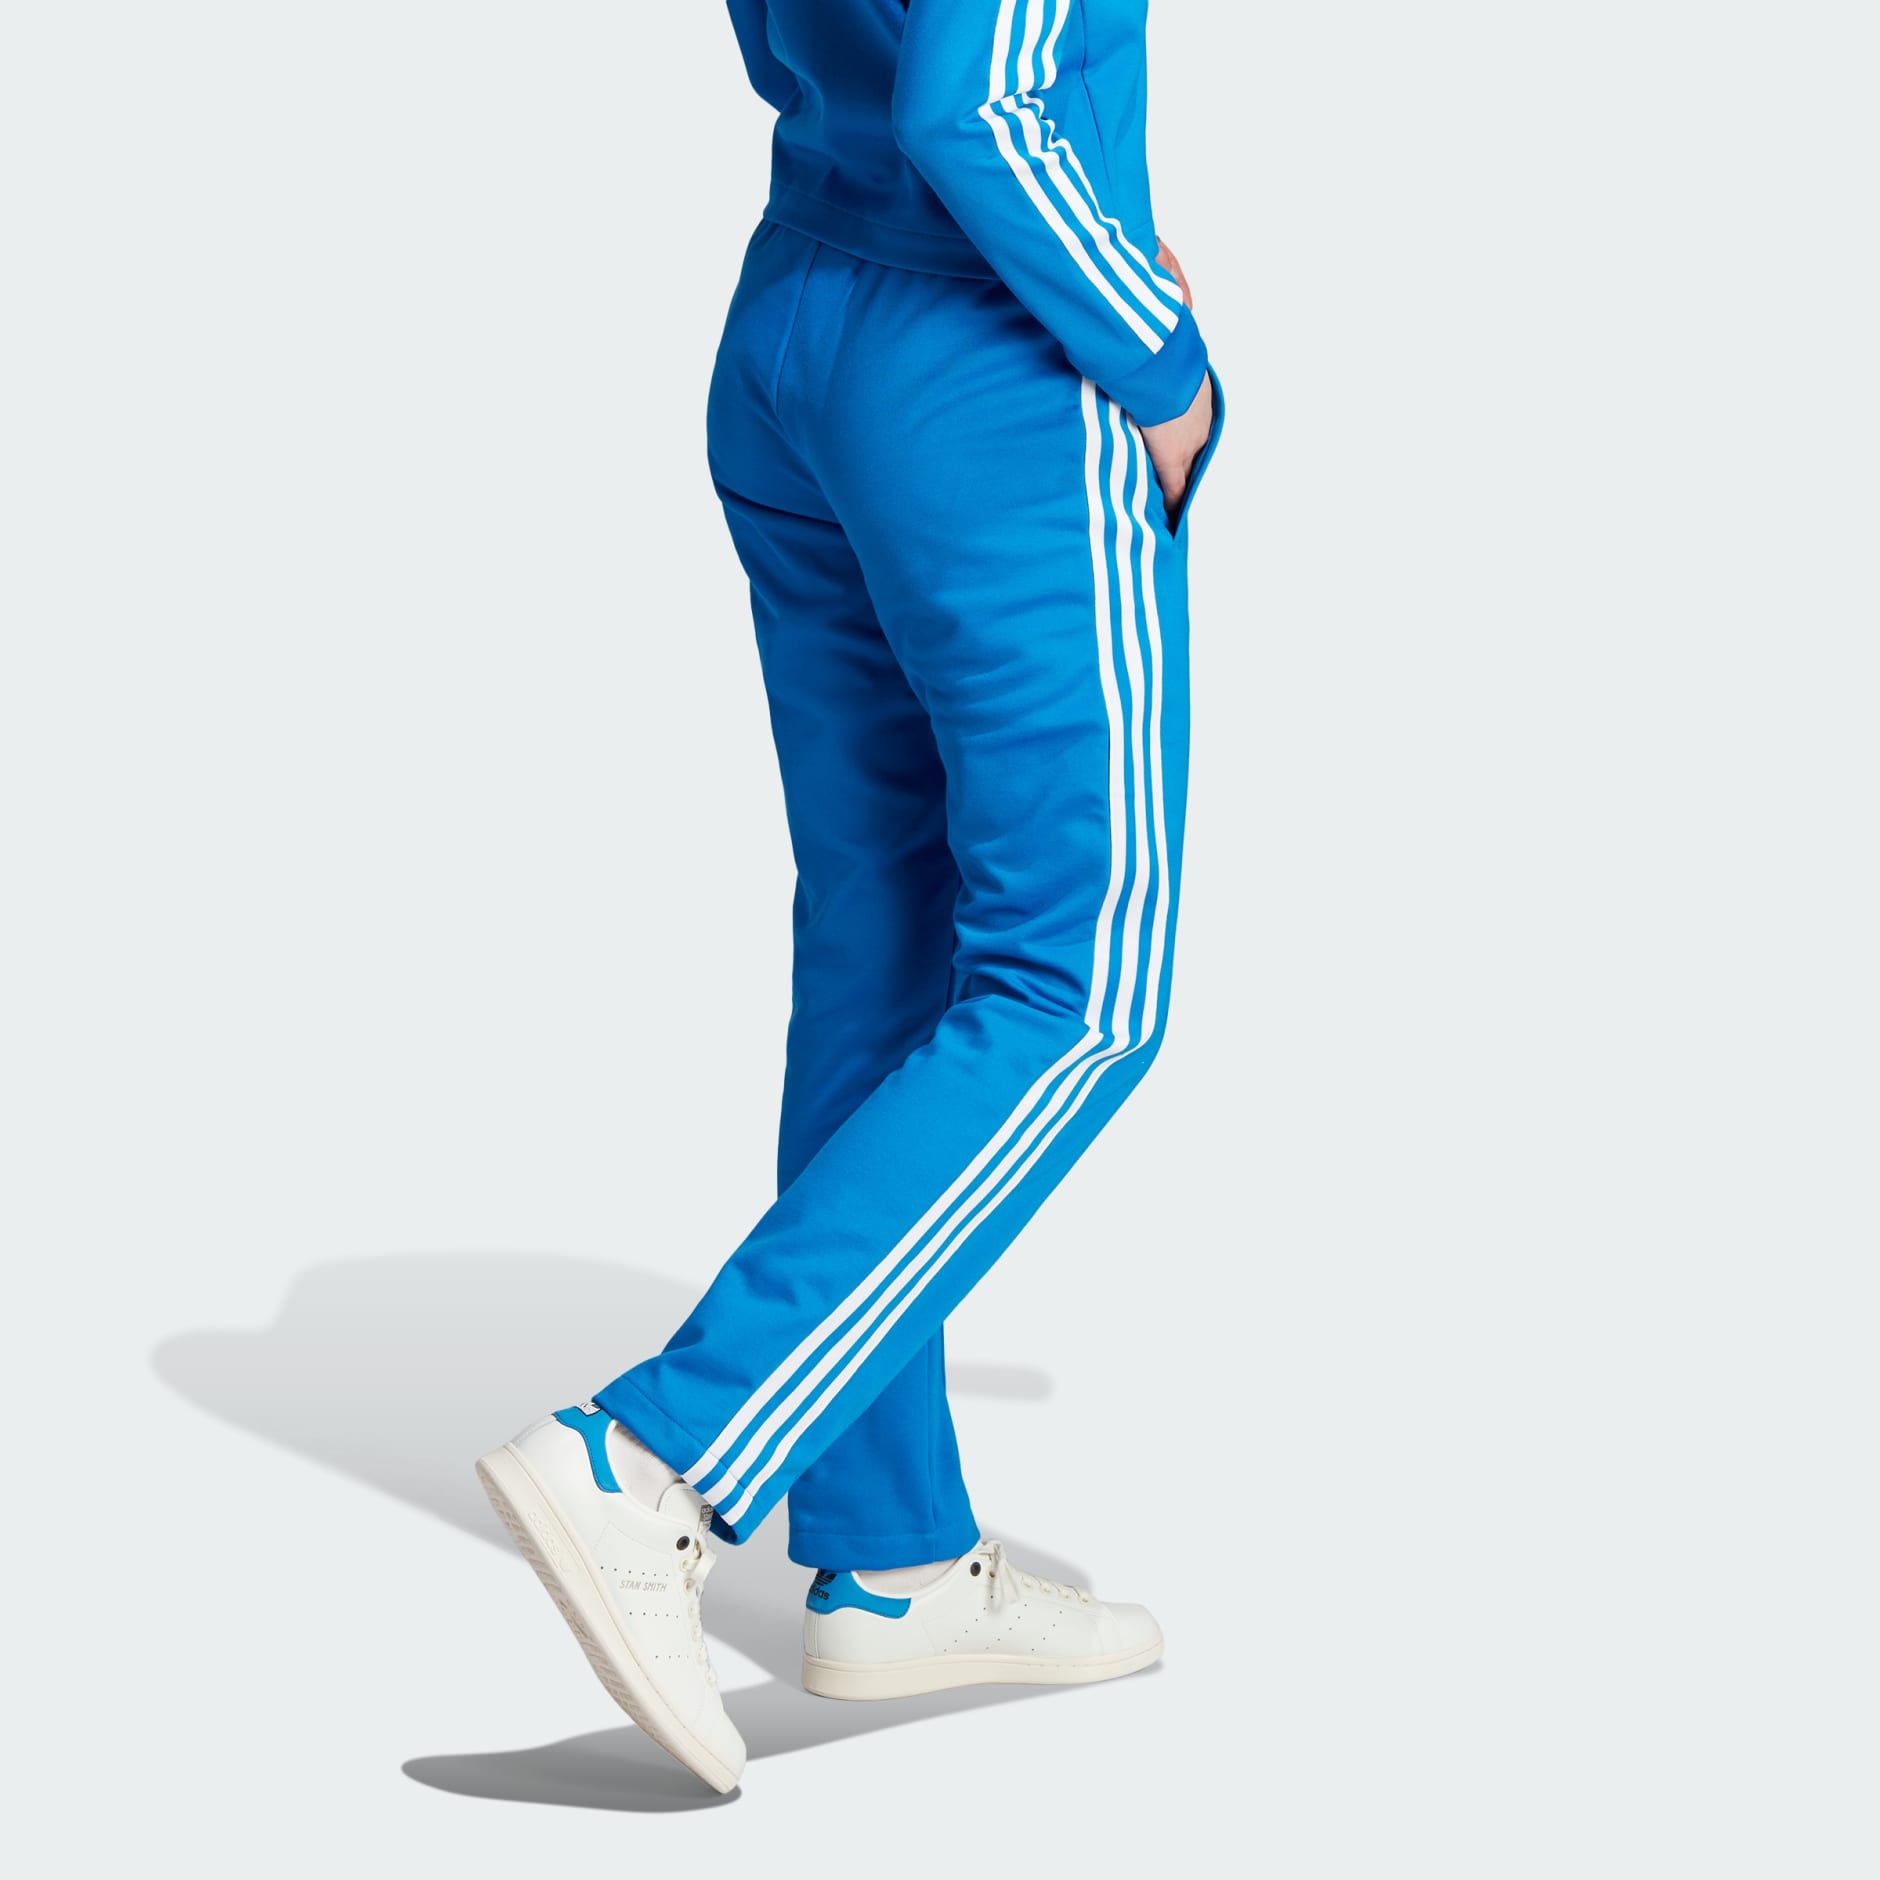 Shop Adidas Pants Womens online | Lazada.com.ph